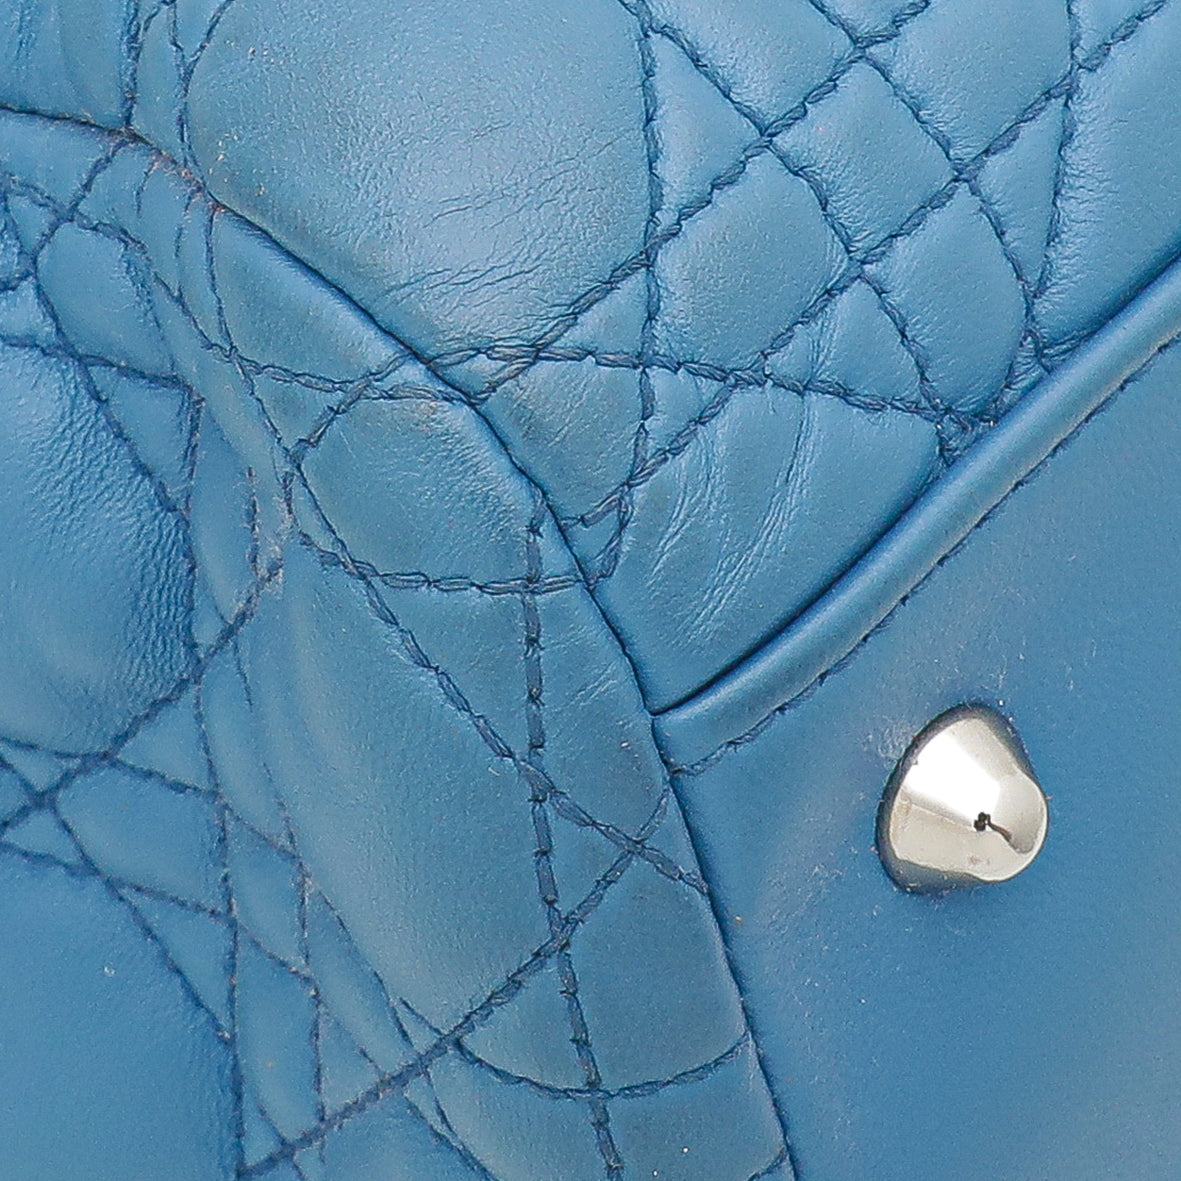 Christian Dior Blue Soft Tote Large Bag